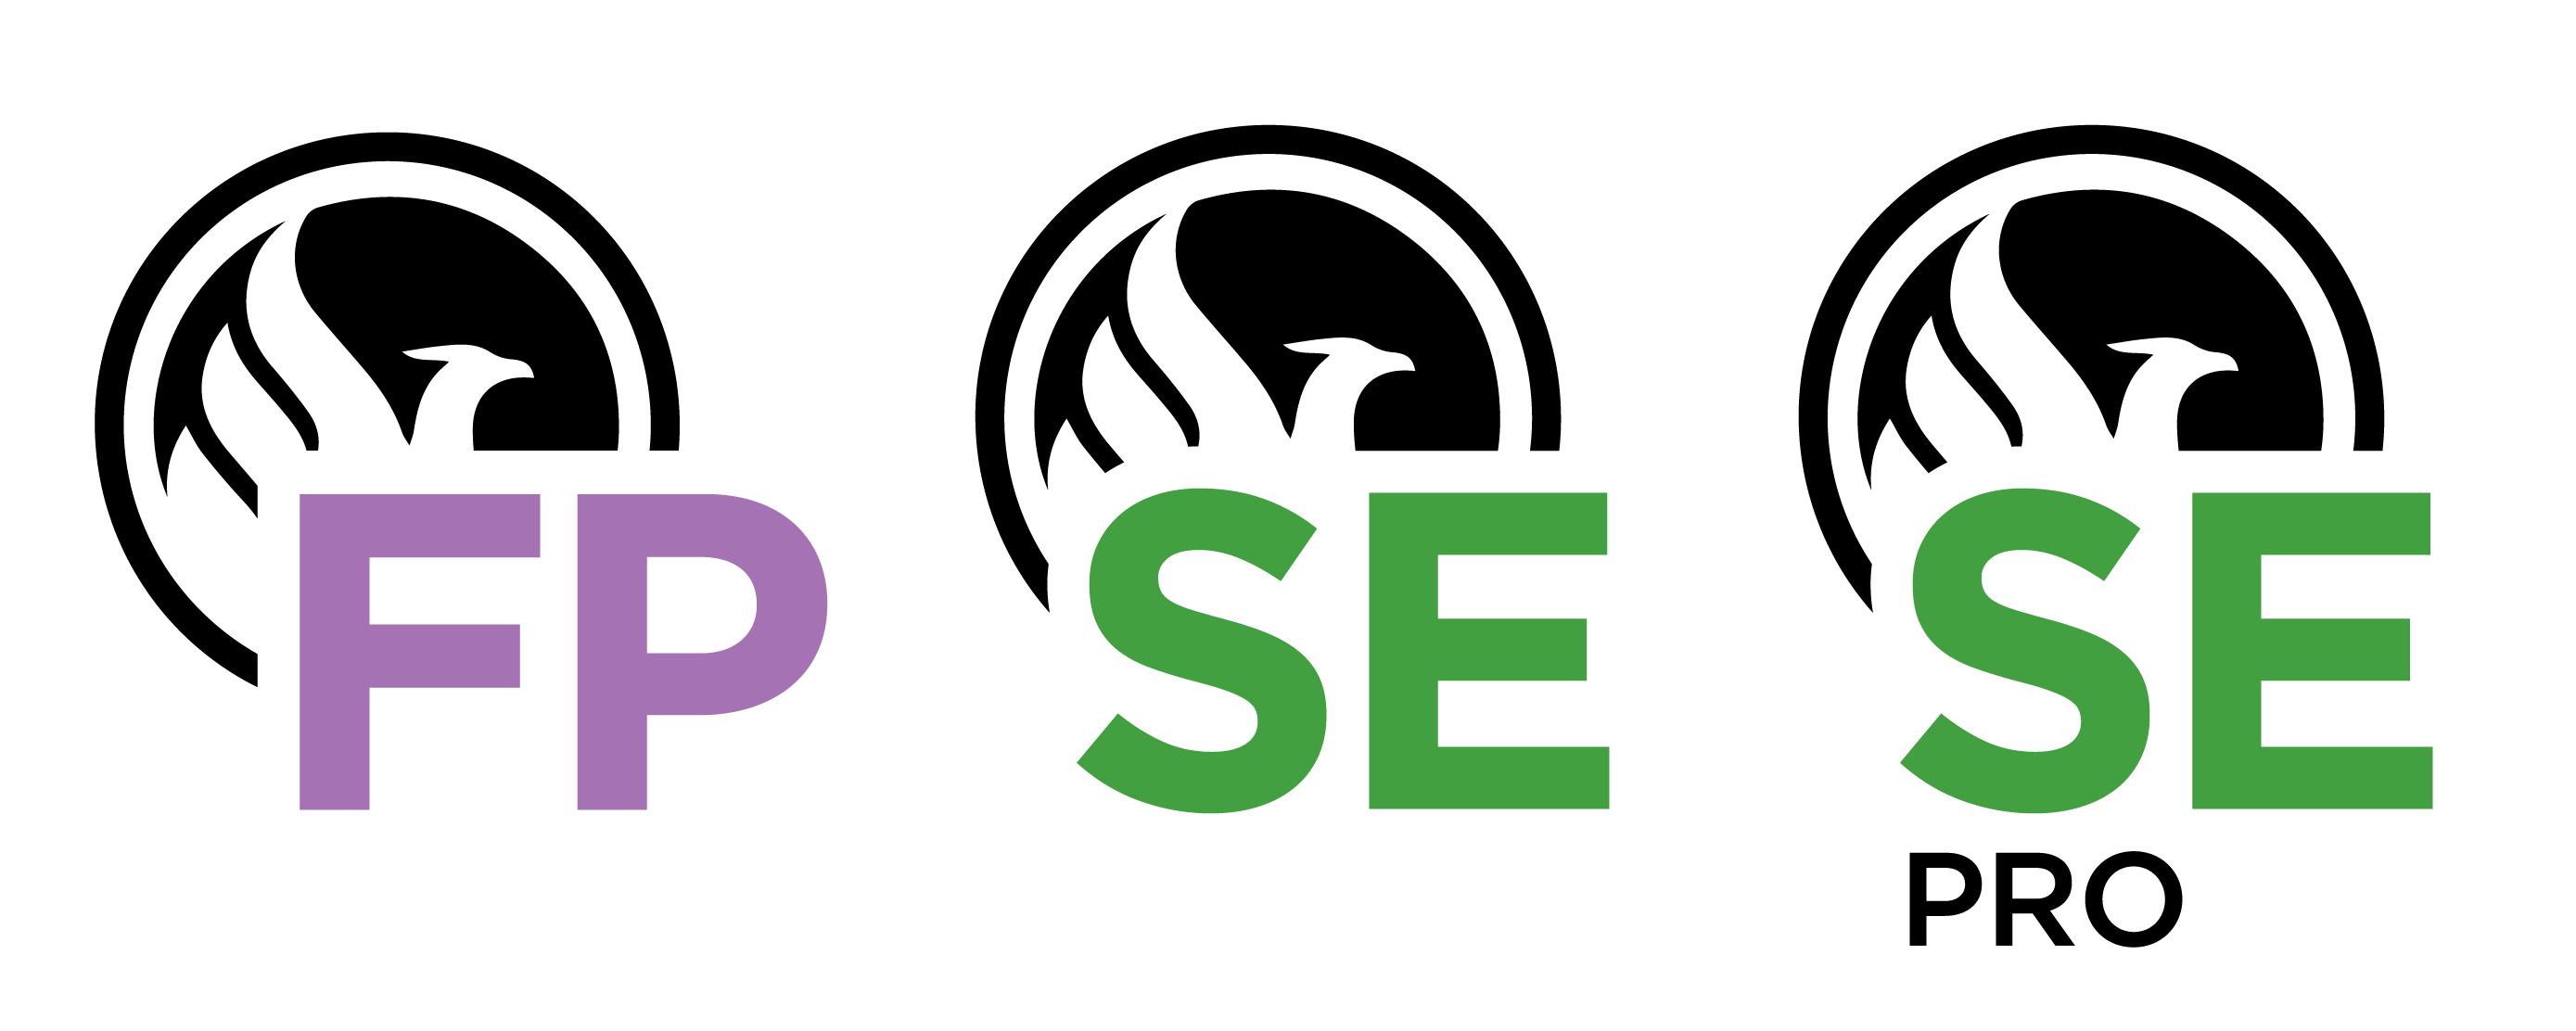 FP_SE_SE-PRO Software Logo Group